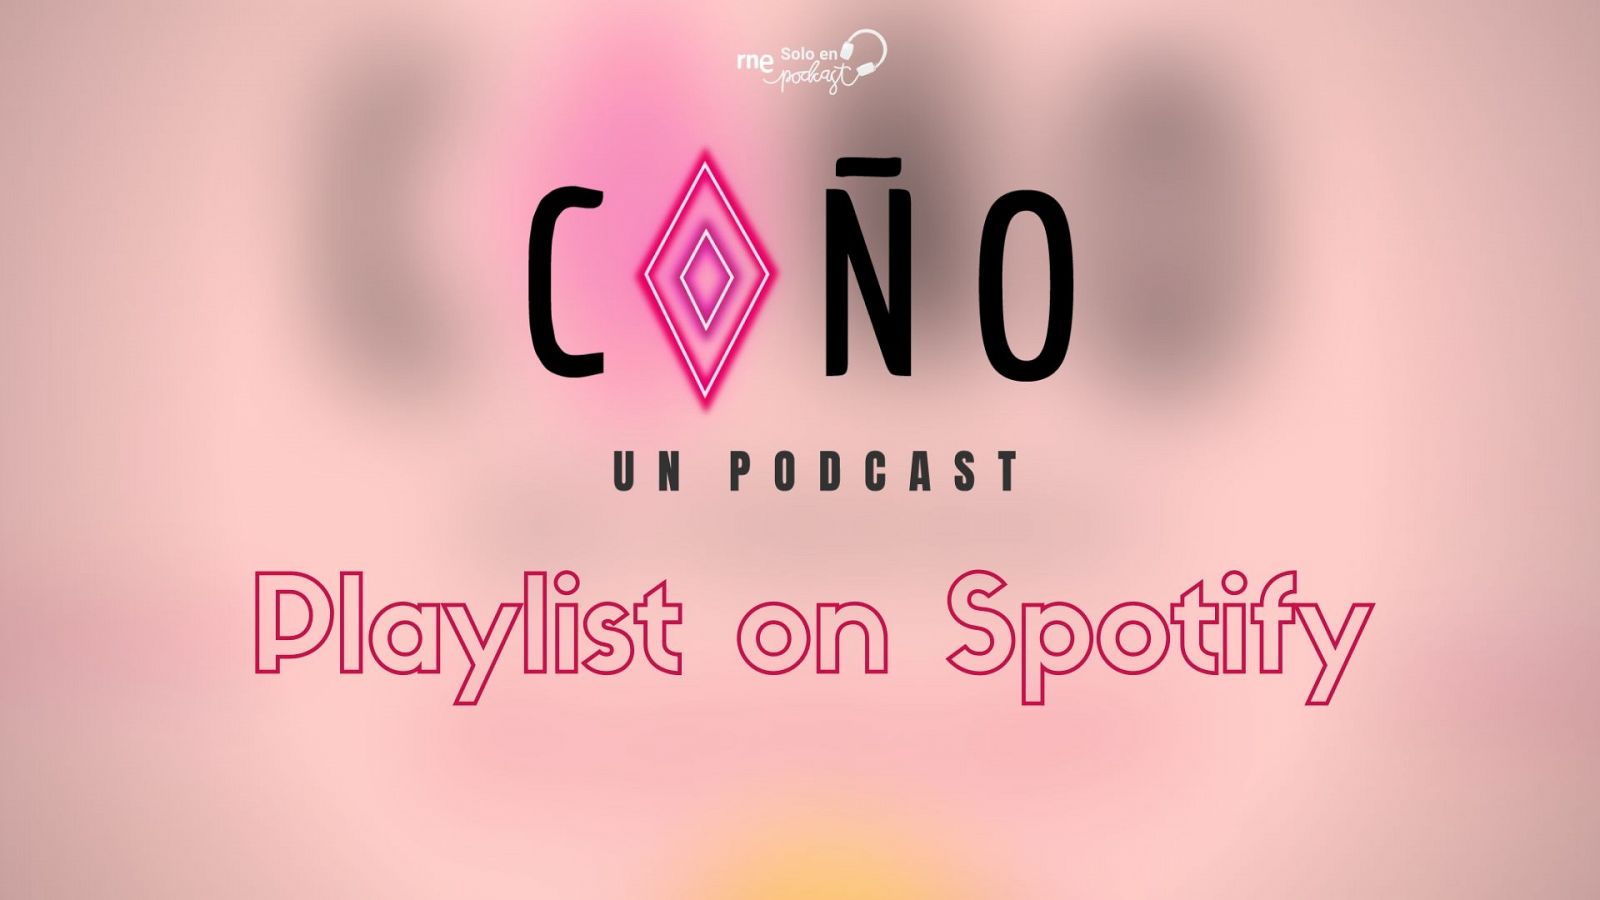 ¡Coño, un podcast!: Playlist on Spotify